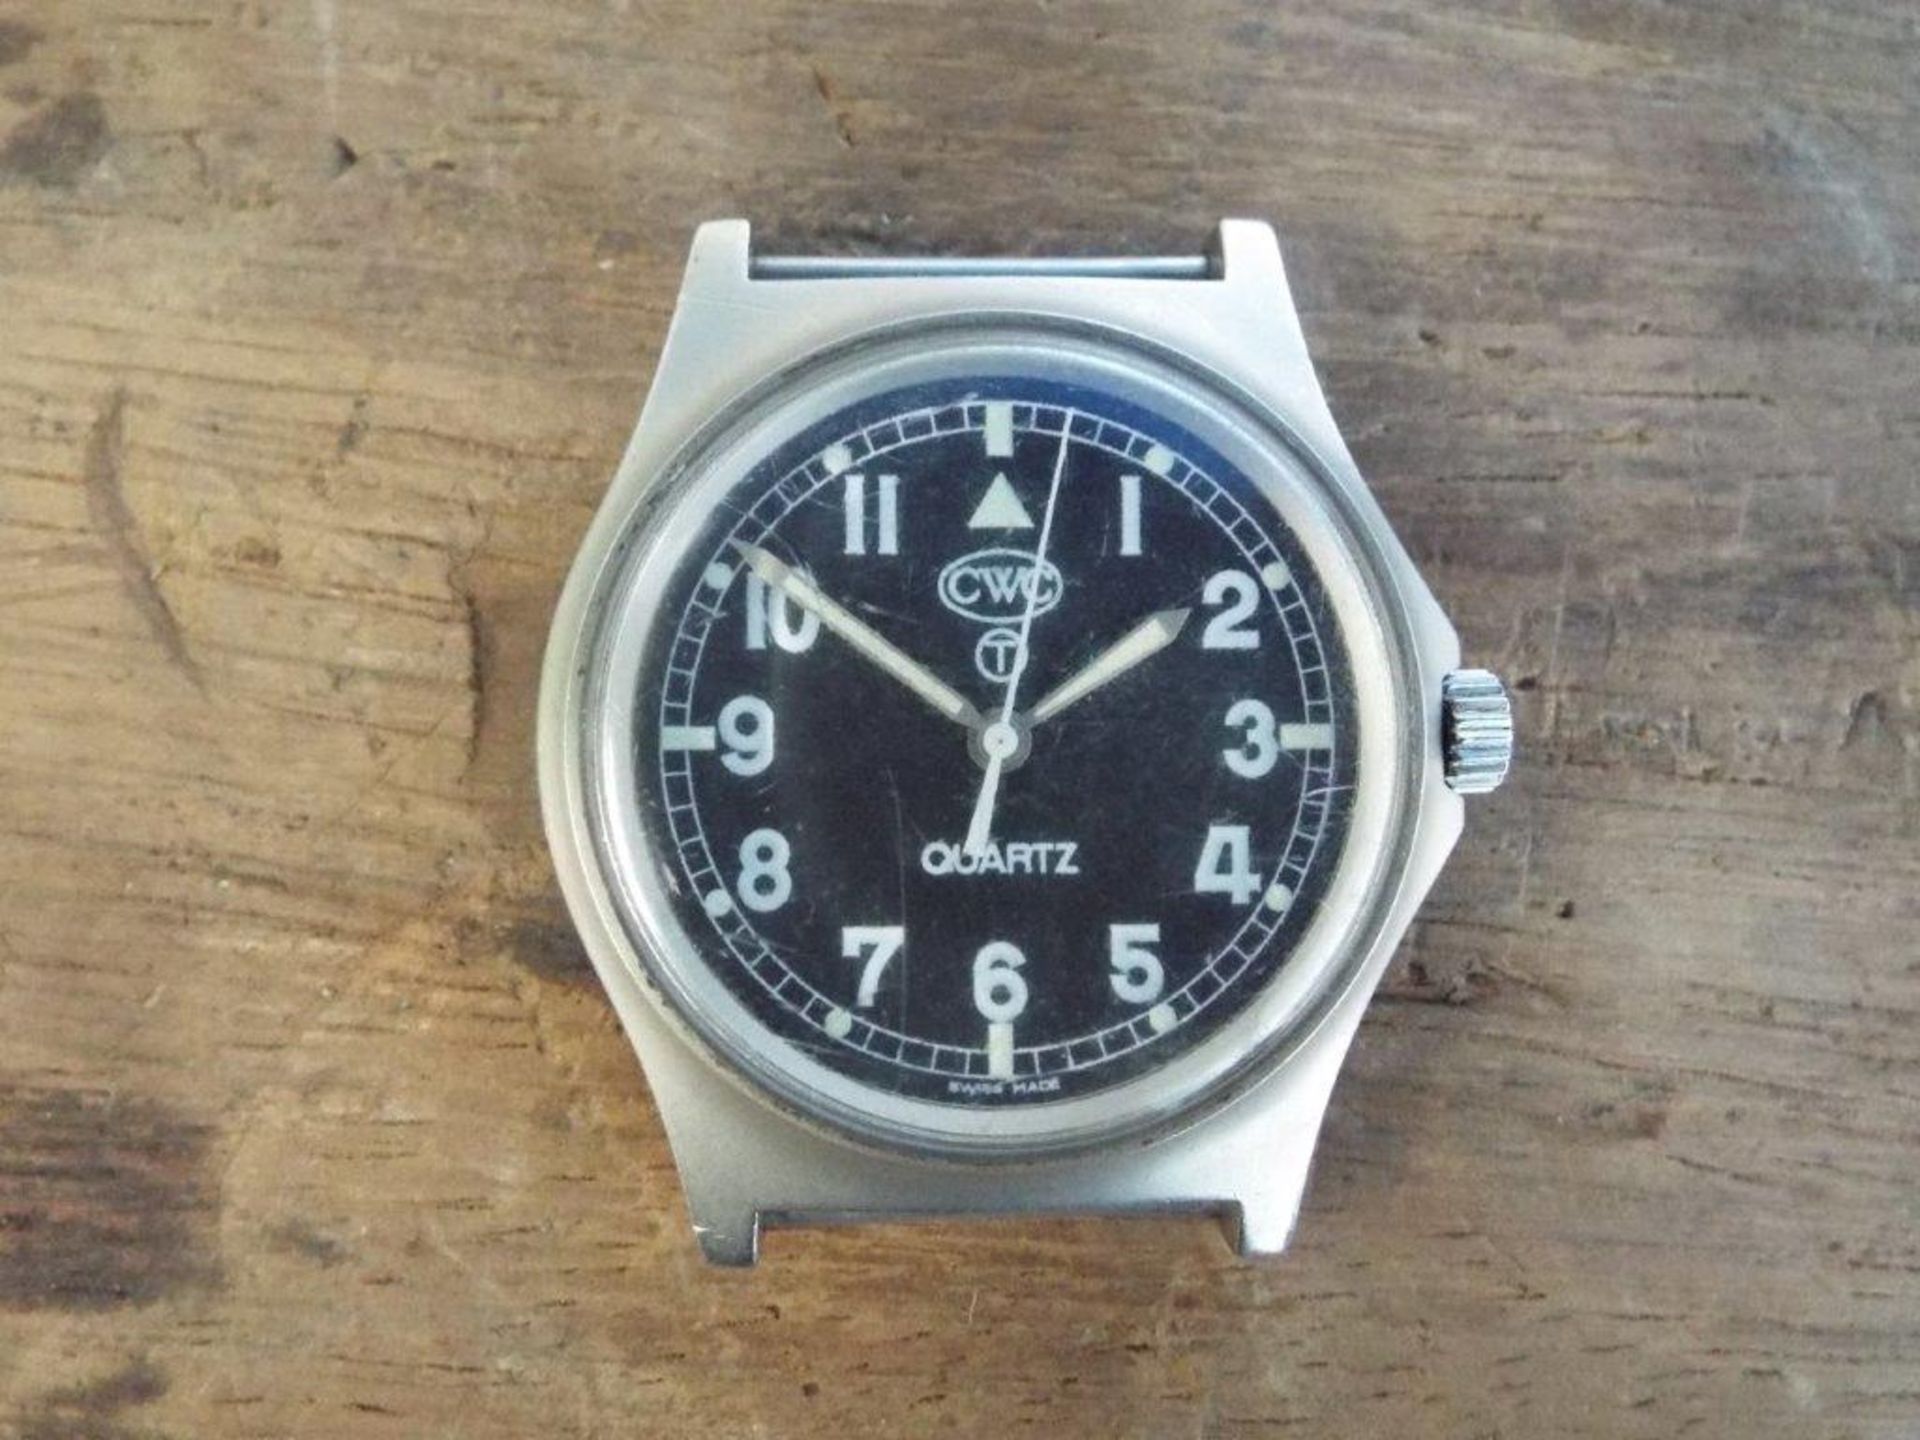 Genuine British Army CWC Quartz Wrist Watch